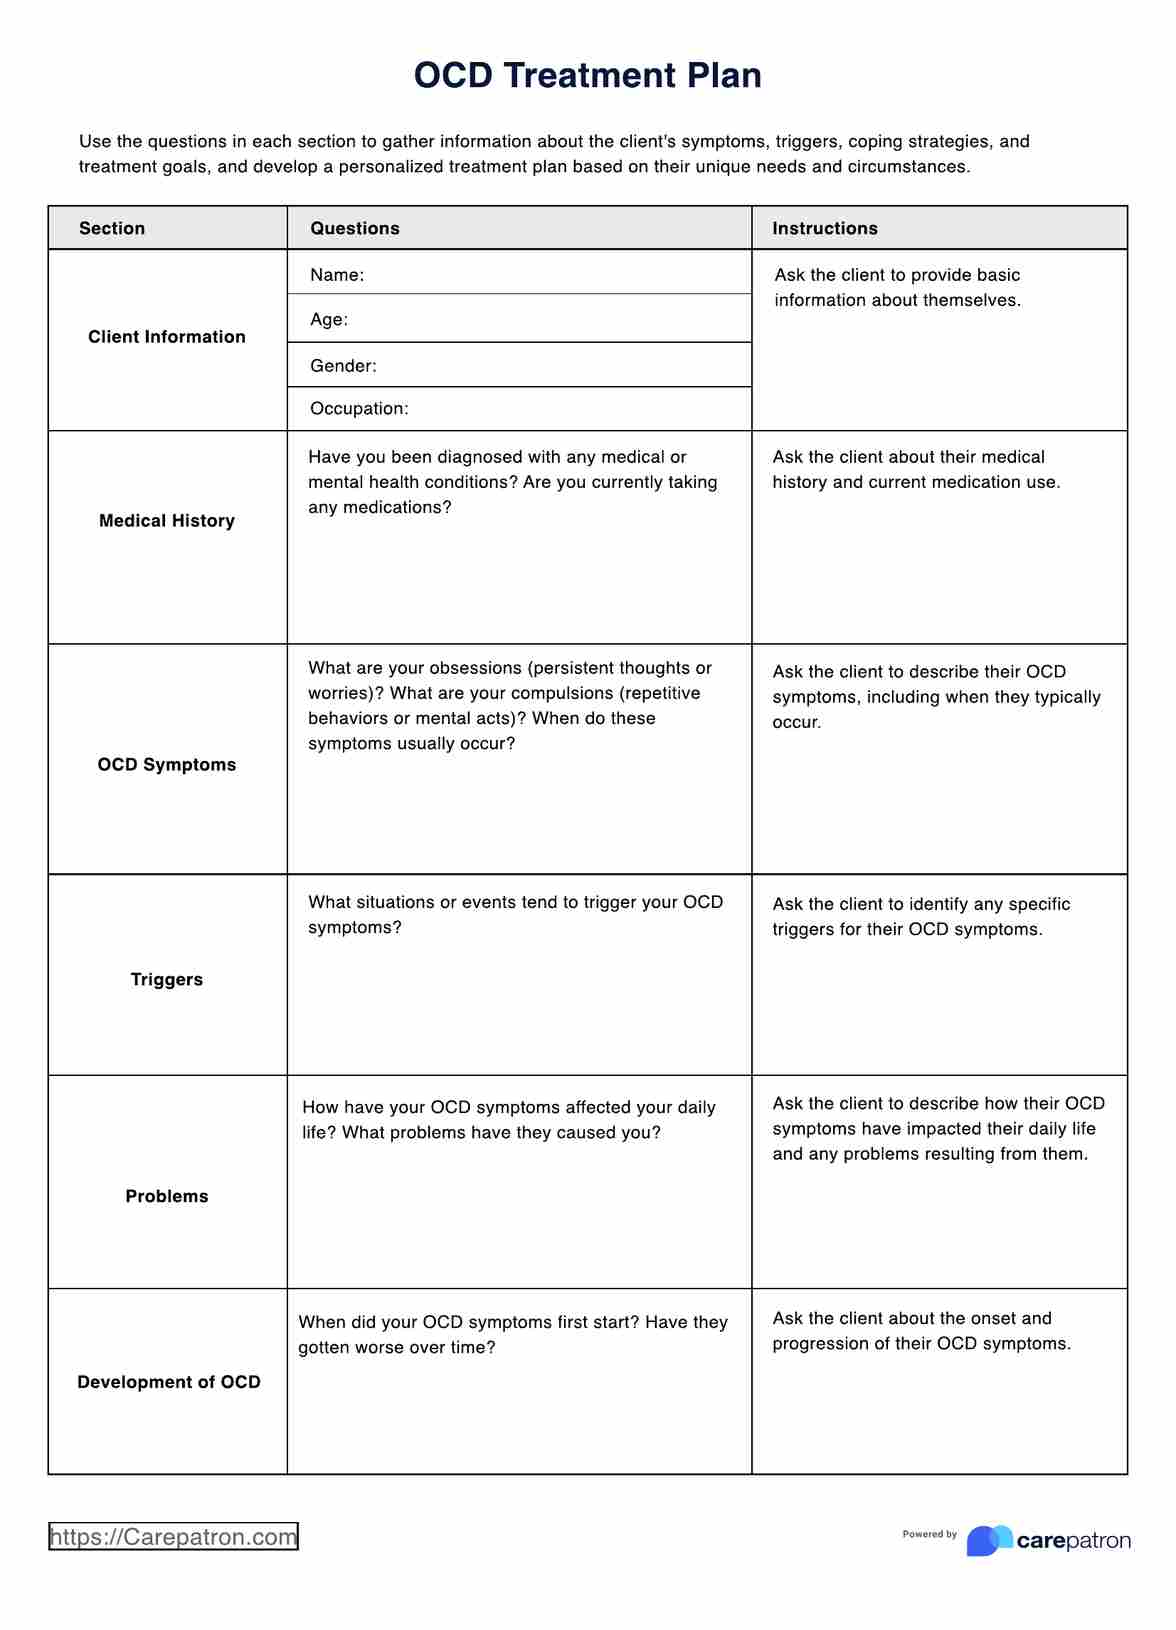 OCD Treatment Plan PDF Example